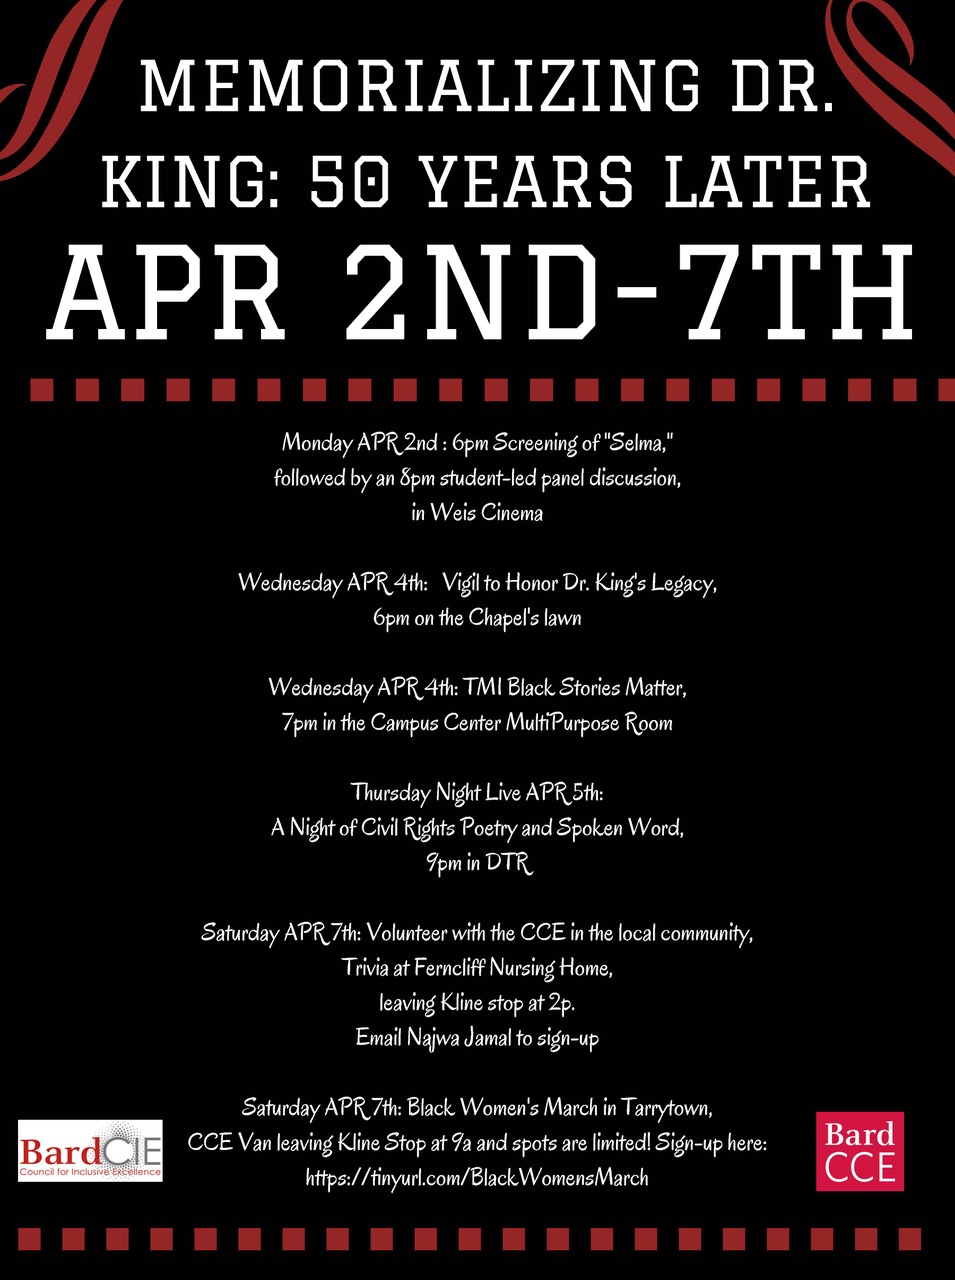 Memorializing Dr. King: 50 Years Later&mdash;Screening of&nbsp;Selma